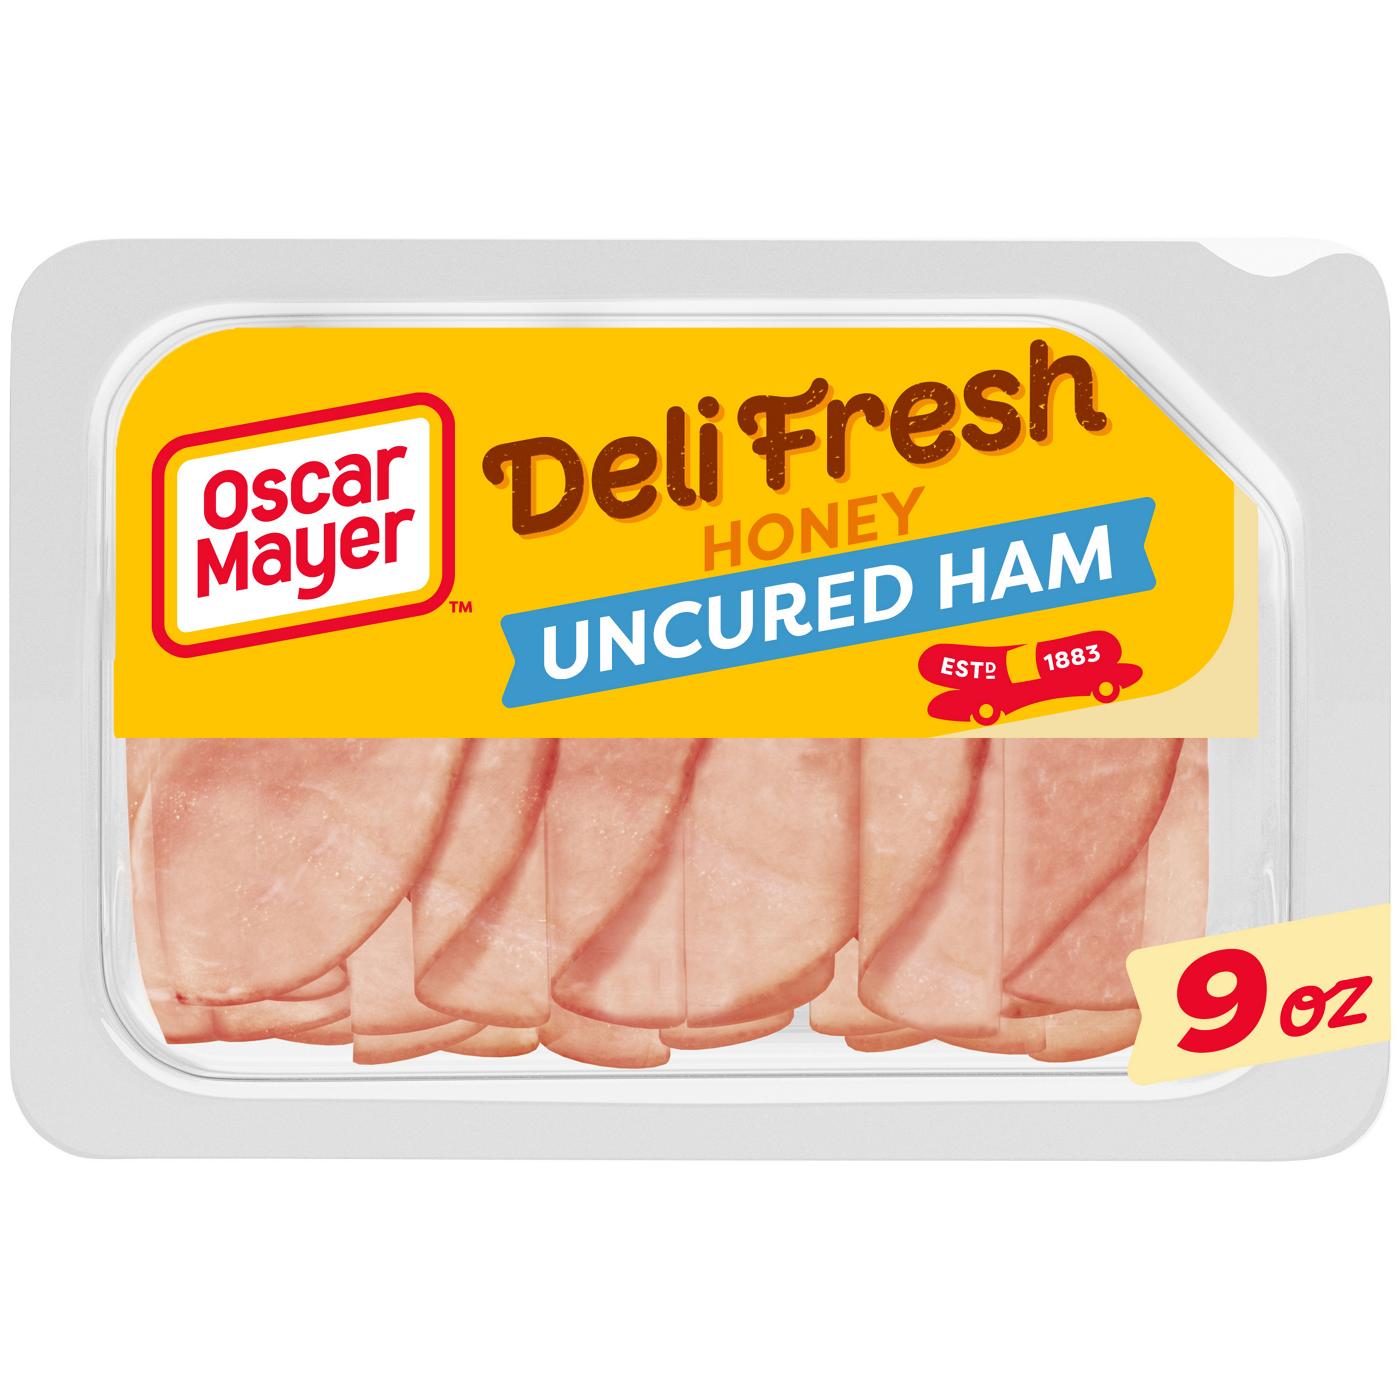 Oscar Mayer Deli Fresh Honey Uncured Sliced Ham Lunch Meat; image 1 of 4